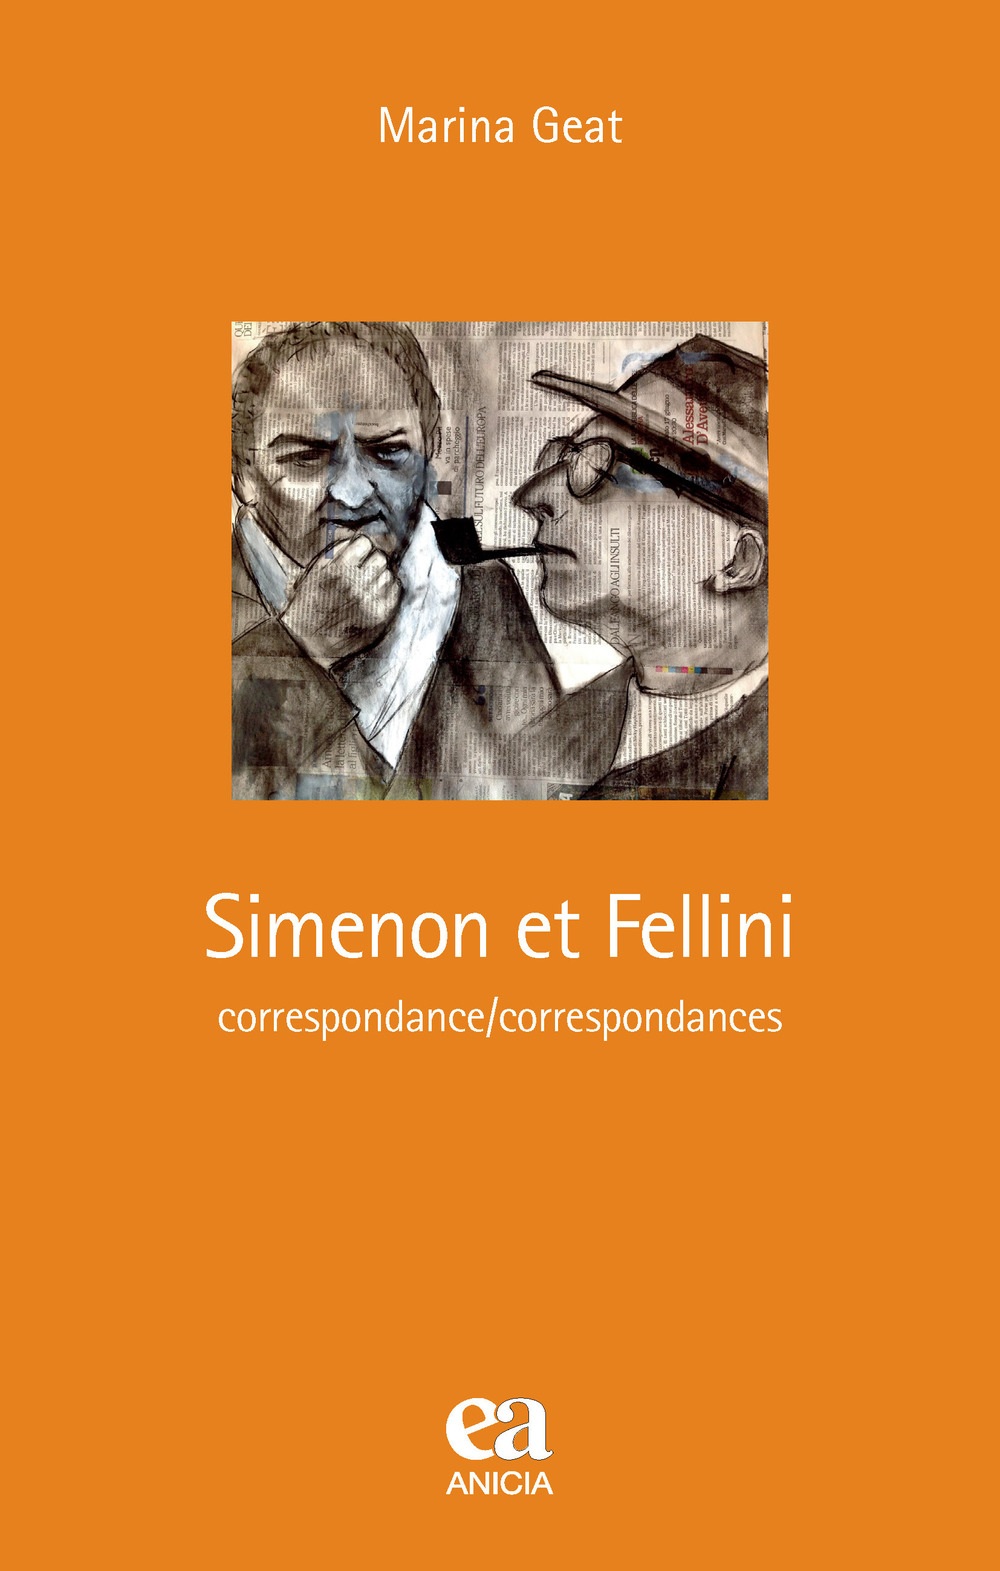 Simenon et Fellini. Correspondance/correspondances. Ediz. speciale